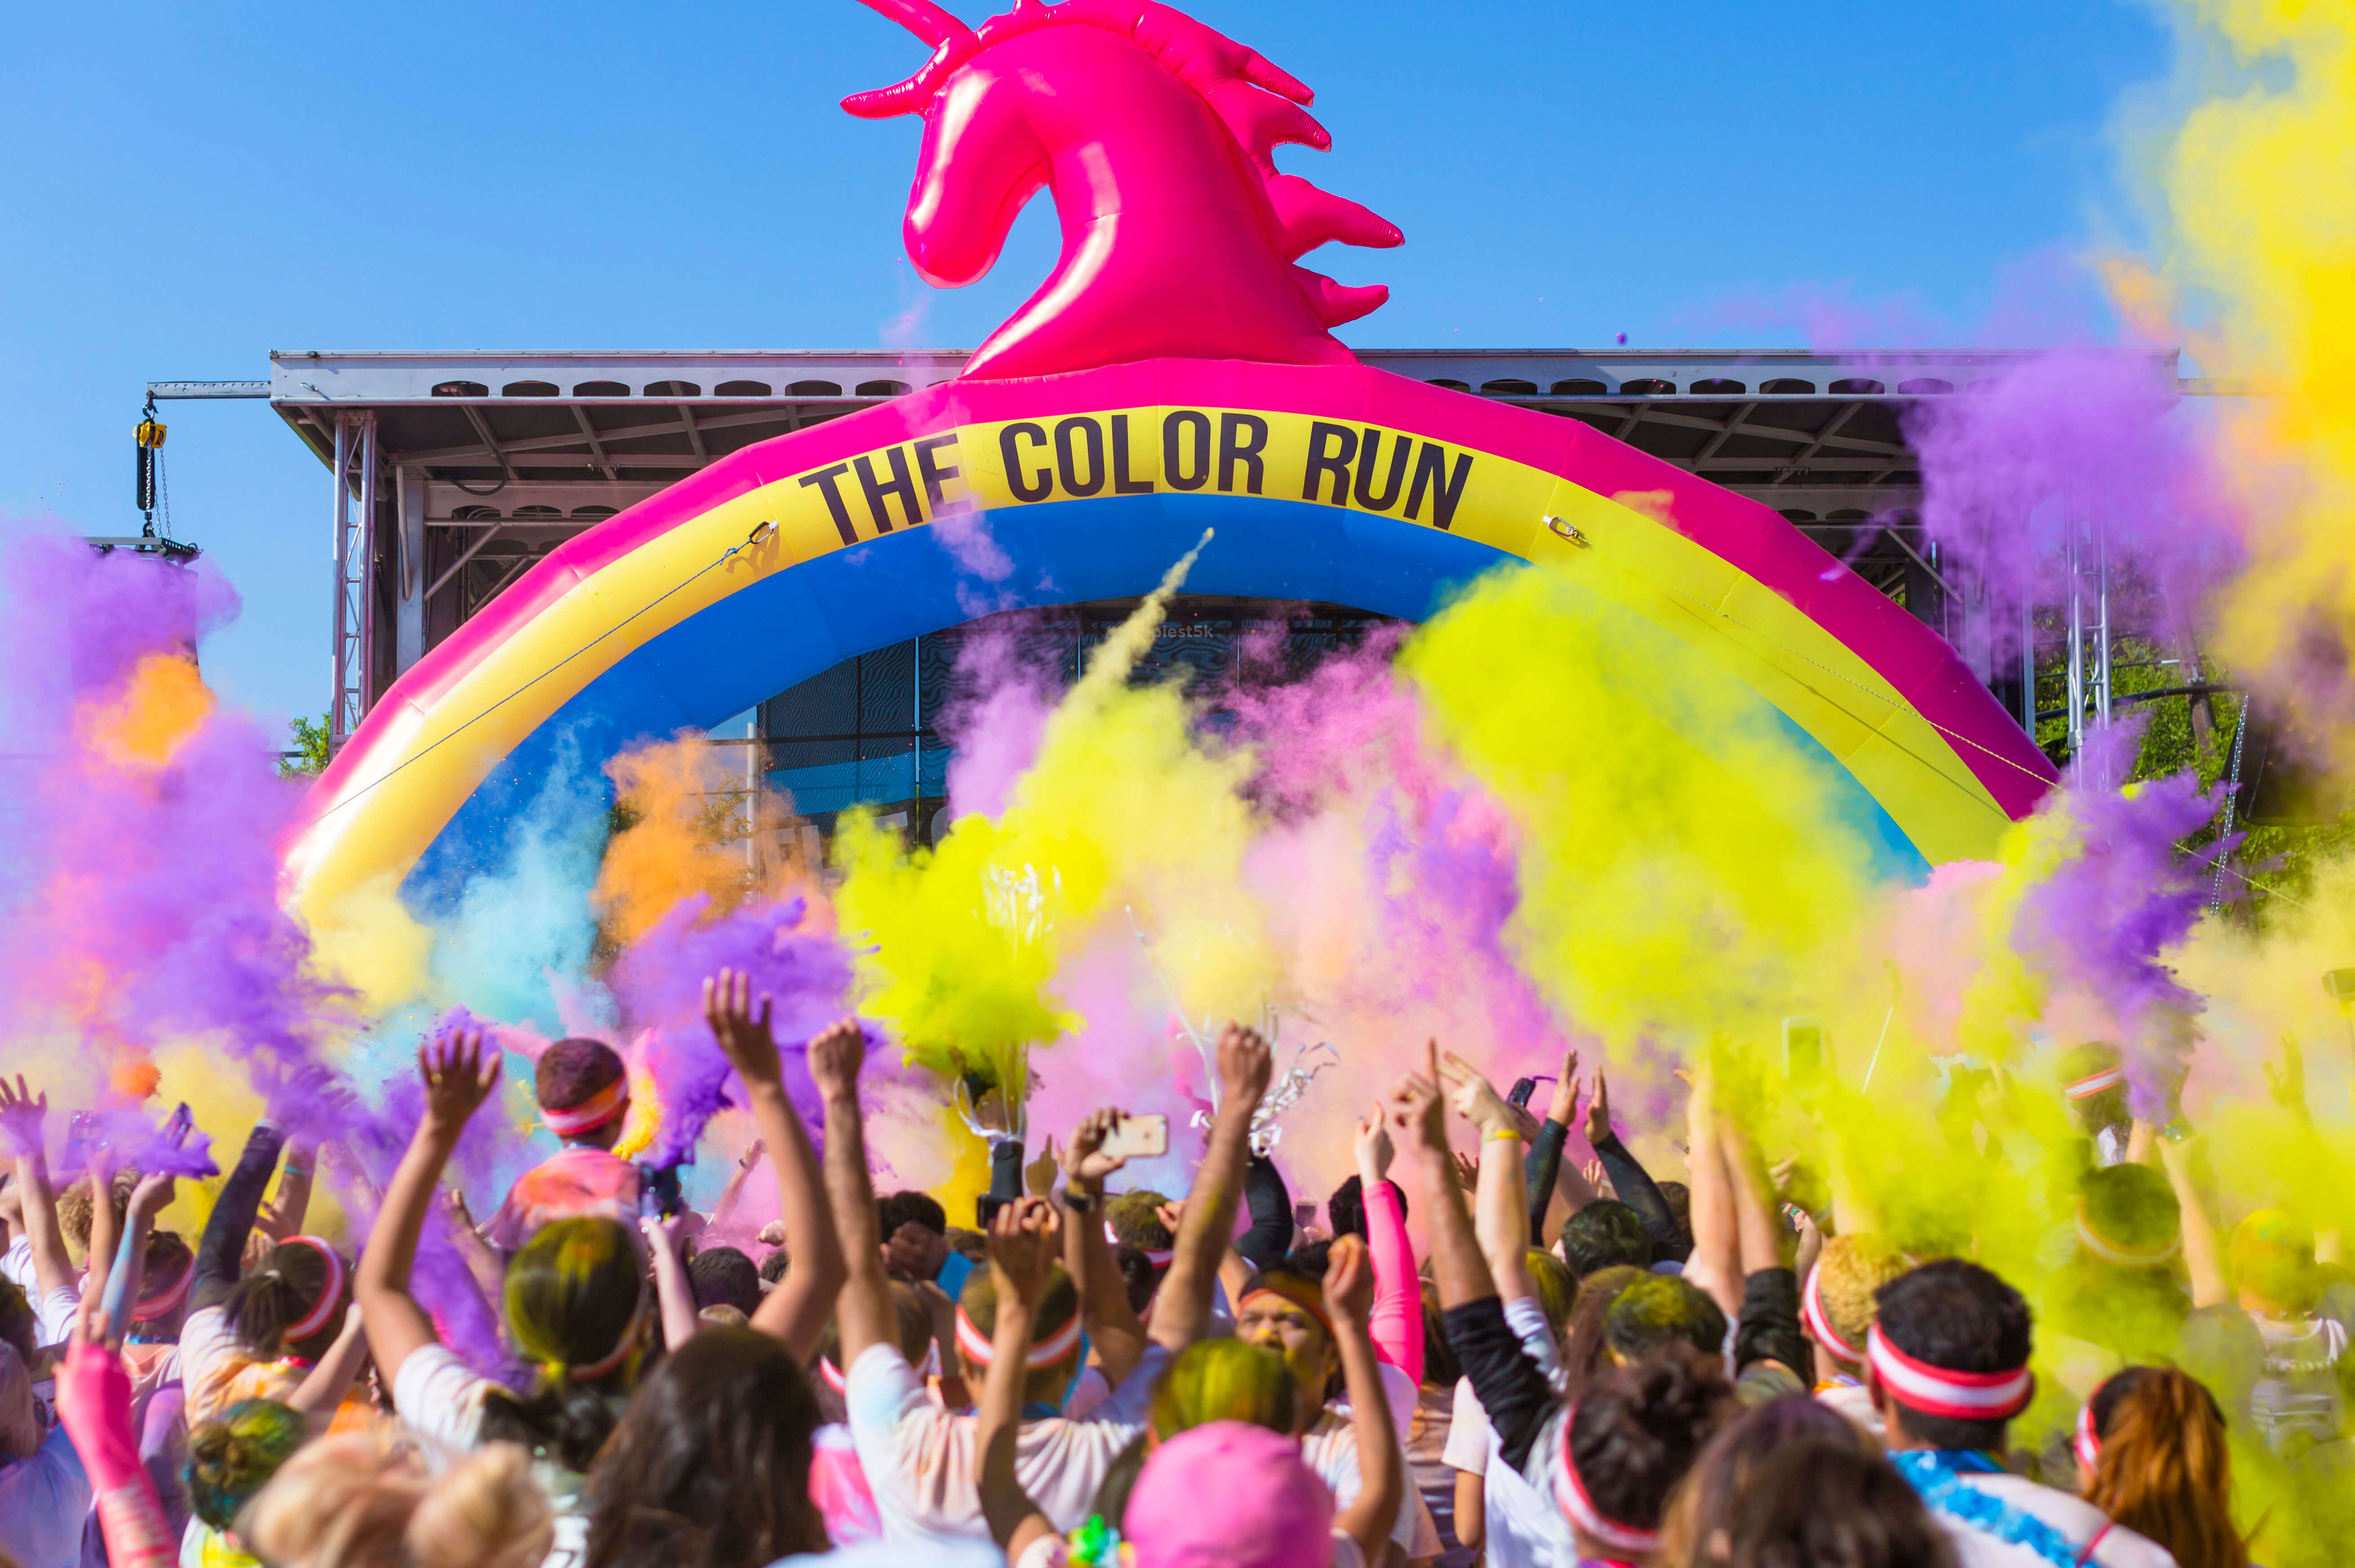 The Color Run Dream Tour – Color throw